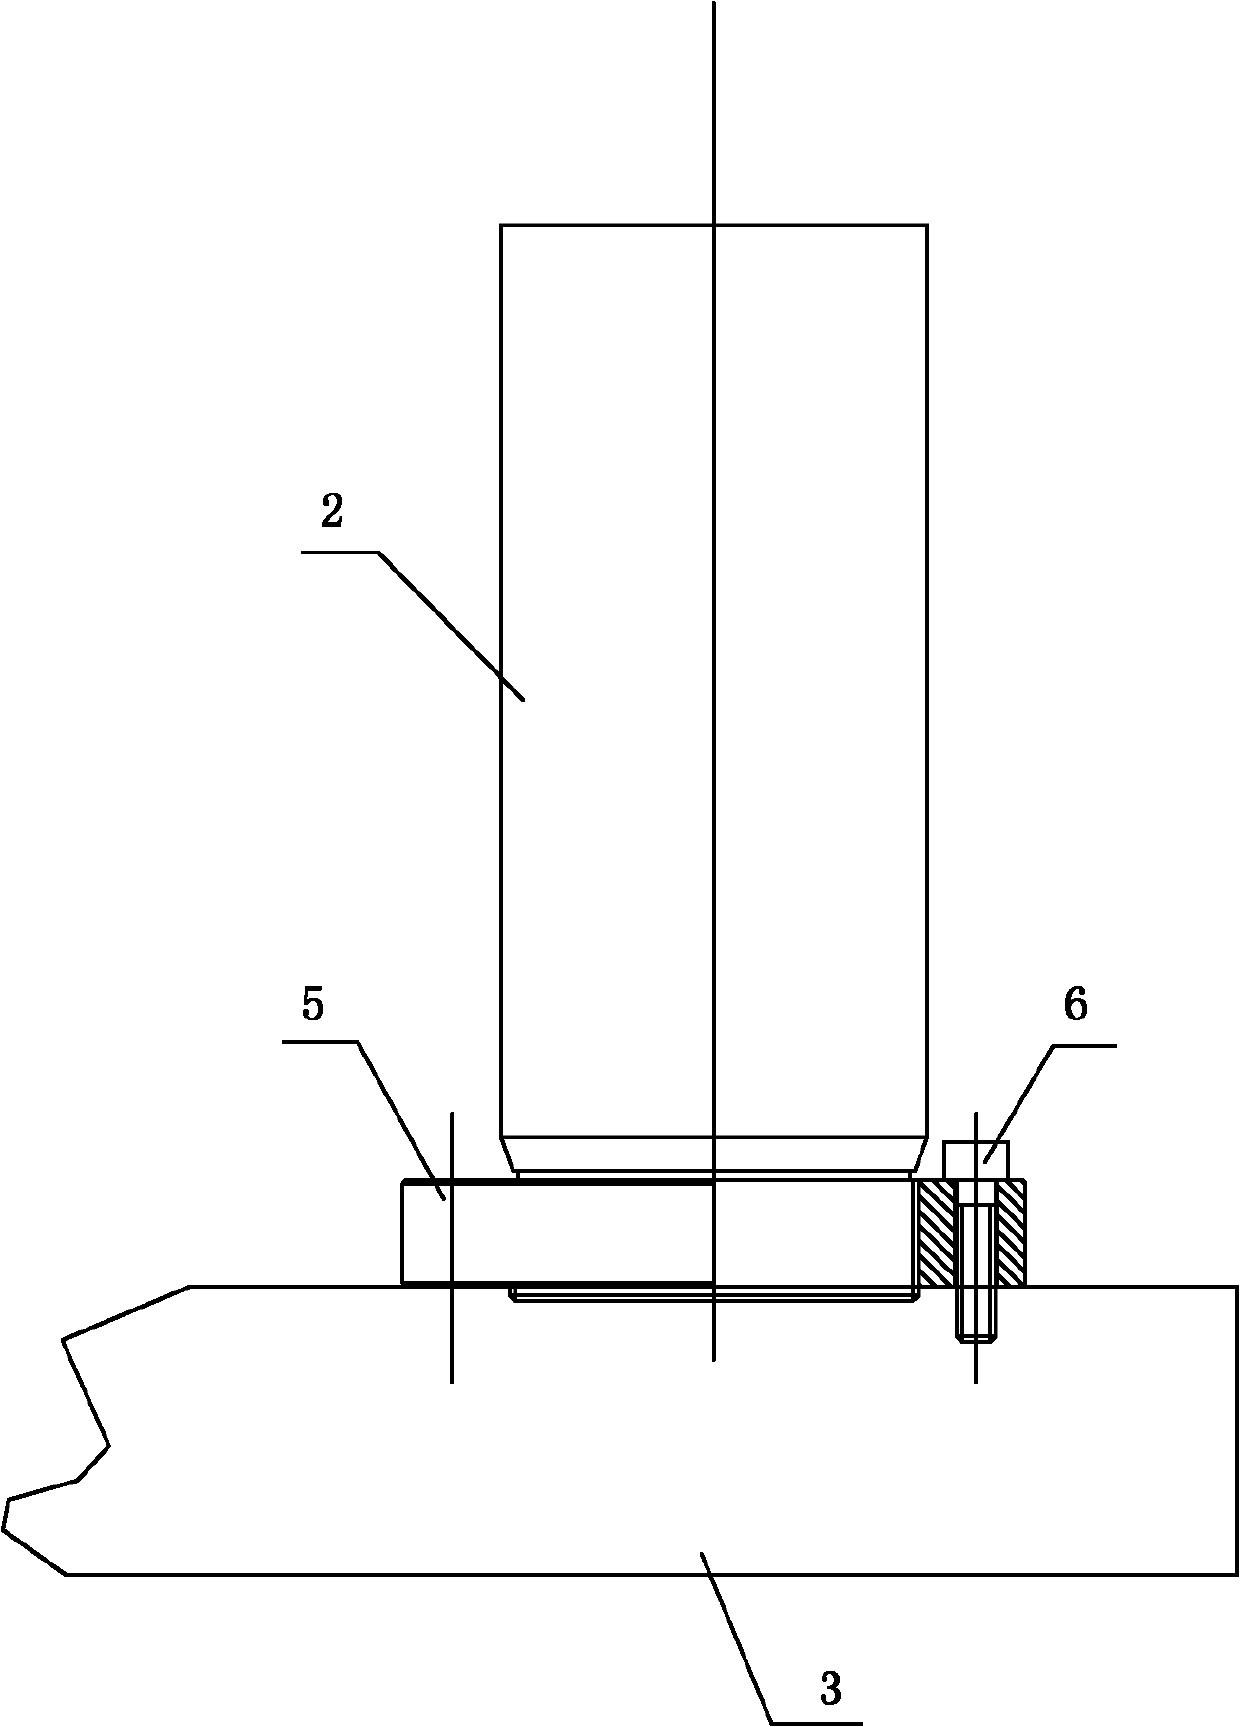 Anti-eccentricity pressing piston rod connecting device of no-guiding slider type hydraulic press